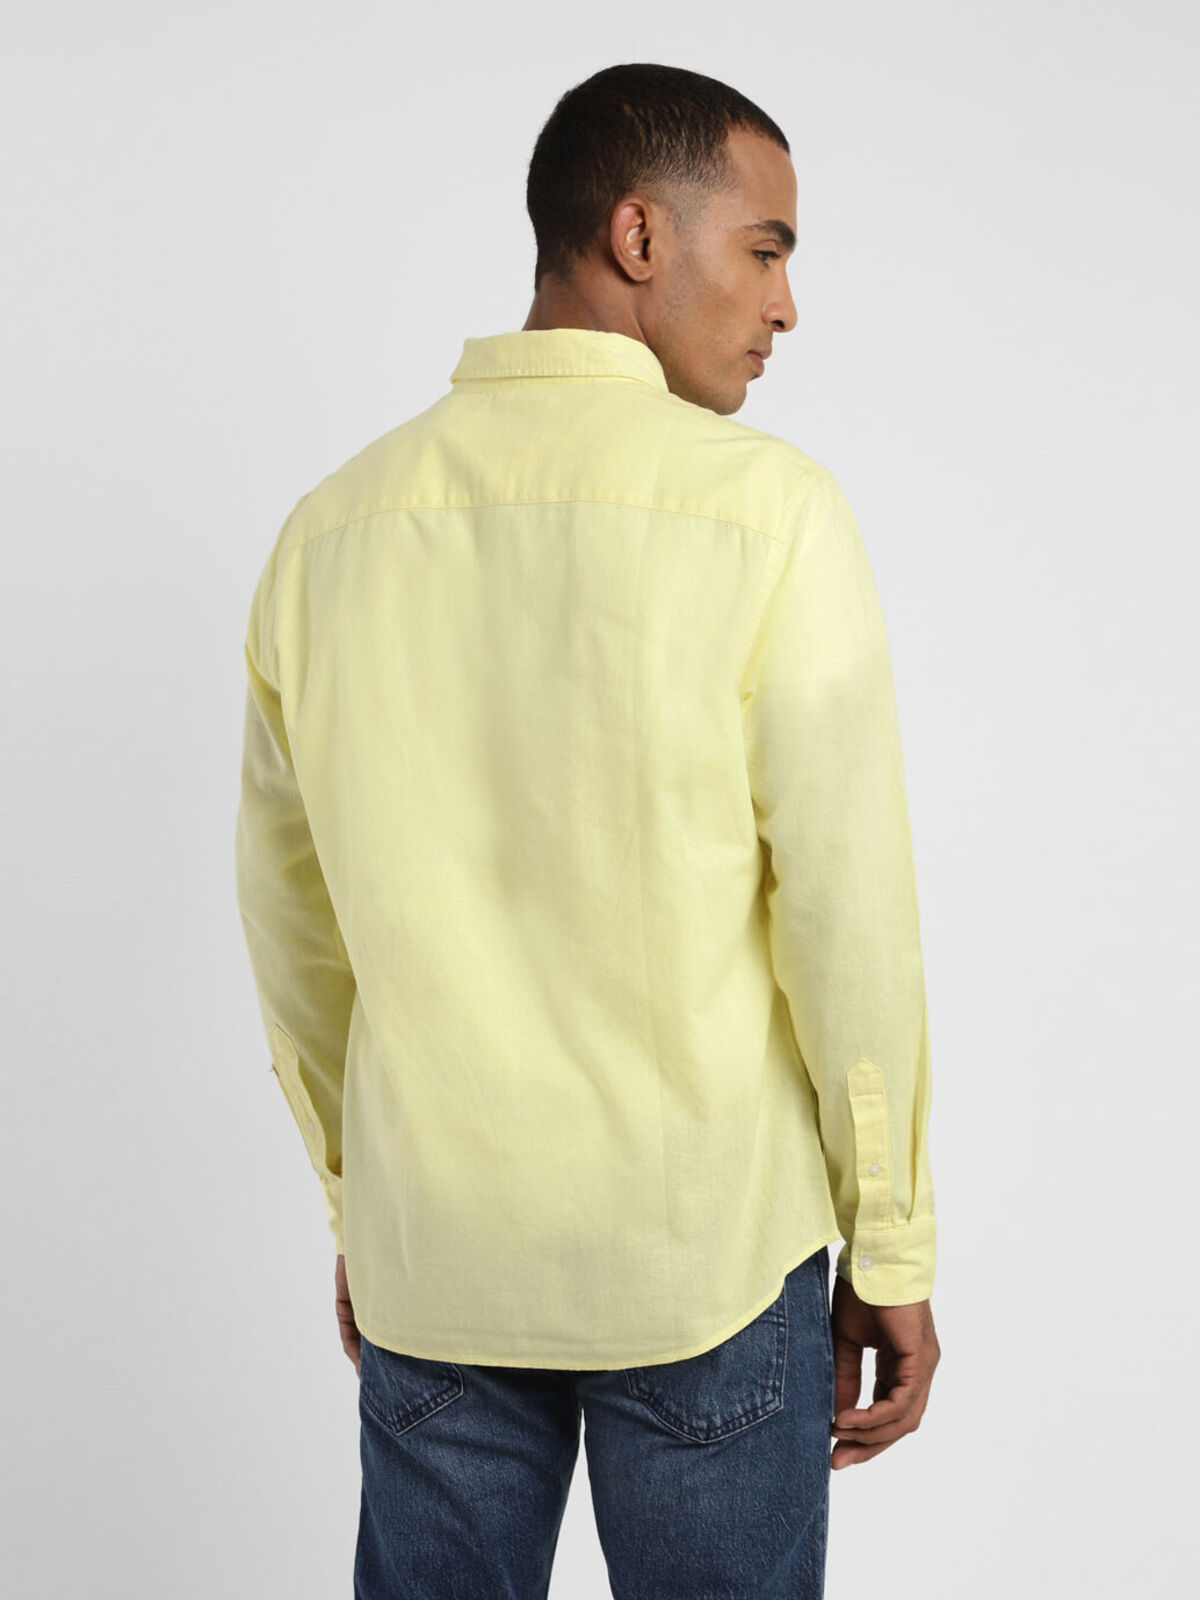 Spykar Men Solid Casual Yellow Shirt - Buy Yellow Spykar Men Solid Casual Yellow  Shirt Online at Best Prices in India | Flipkart.com